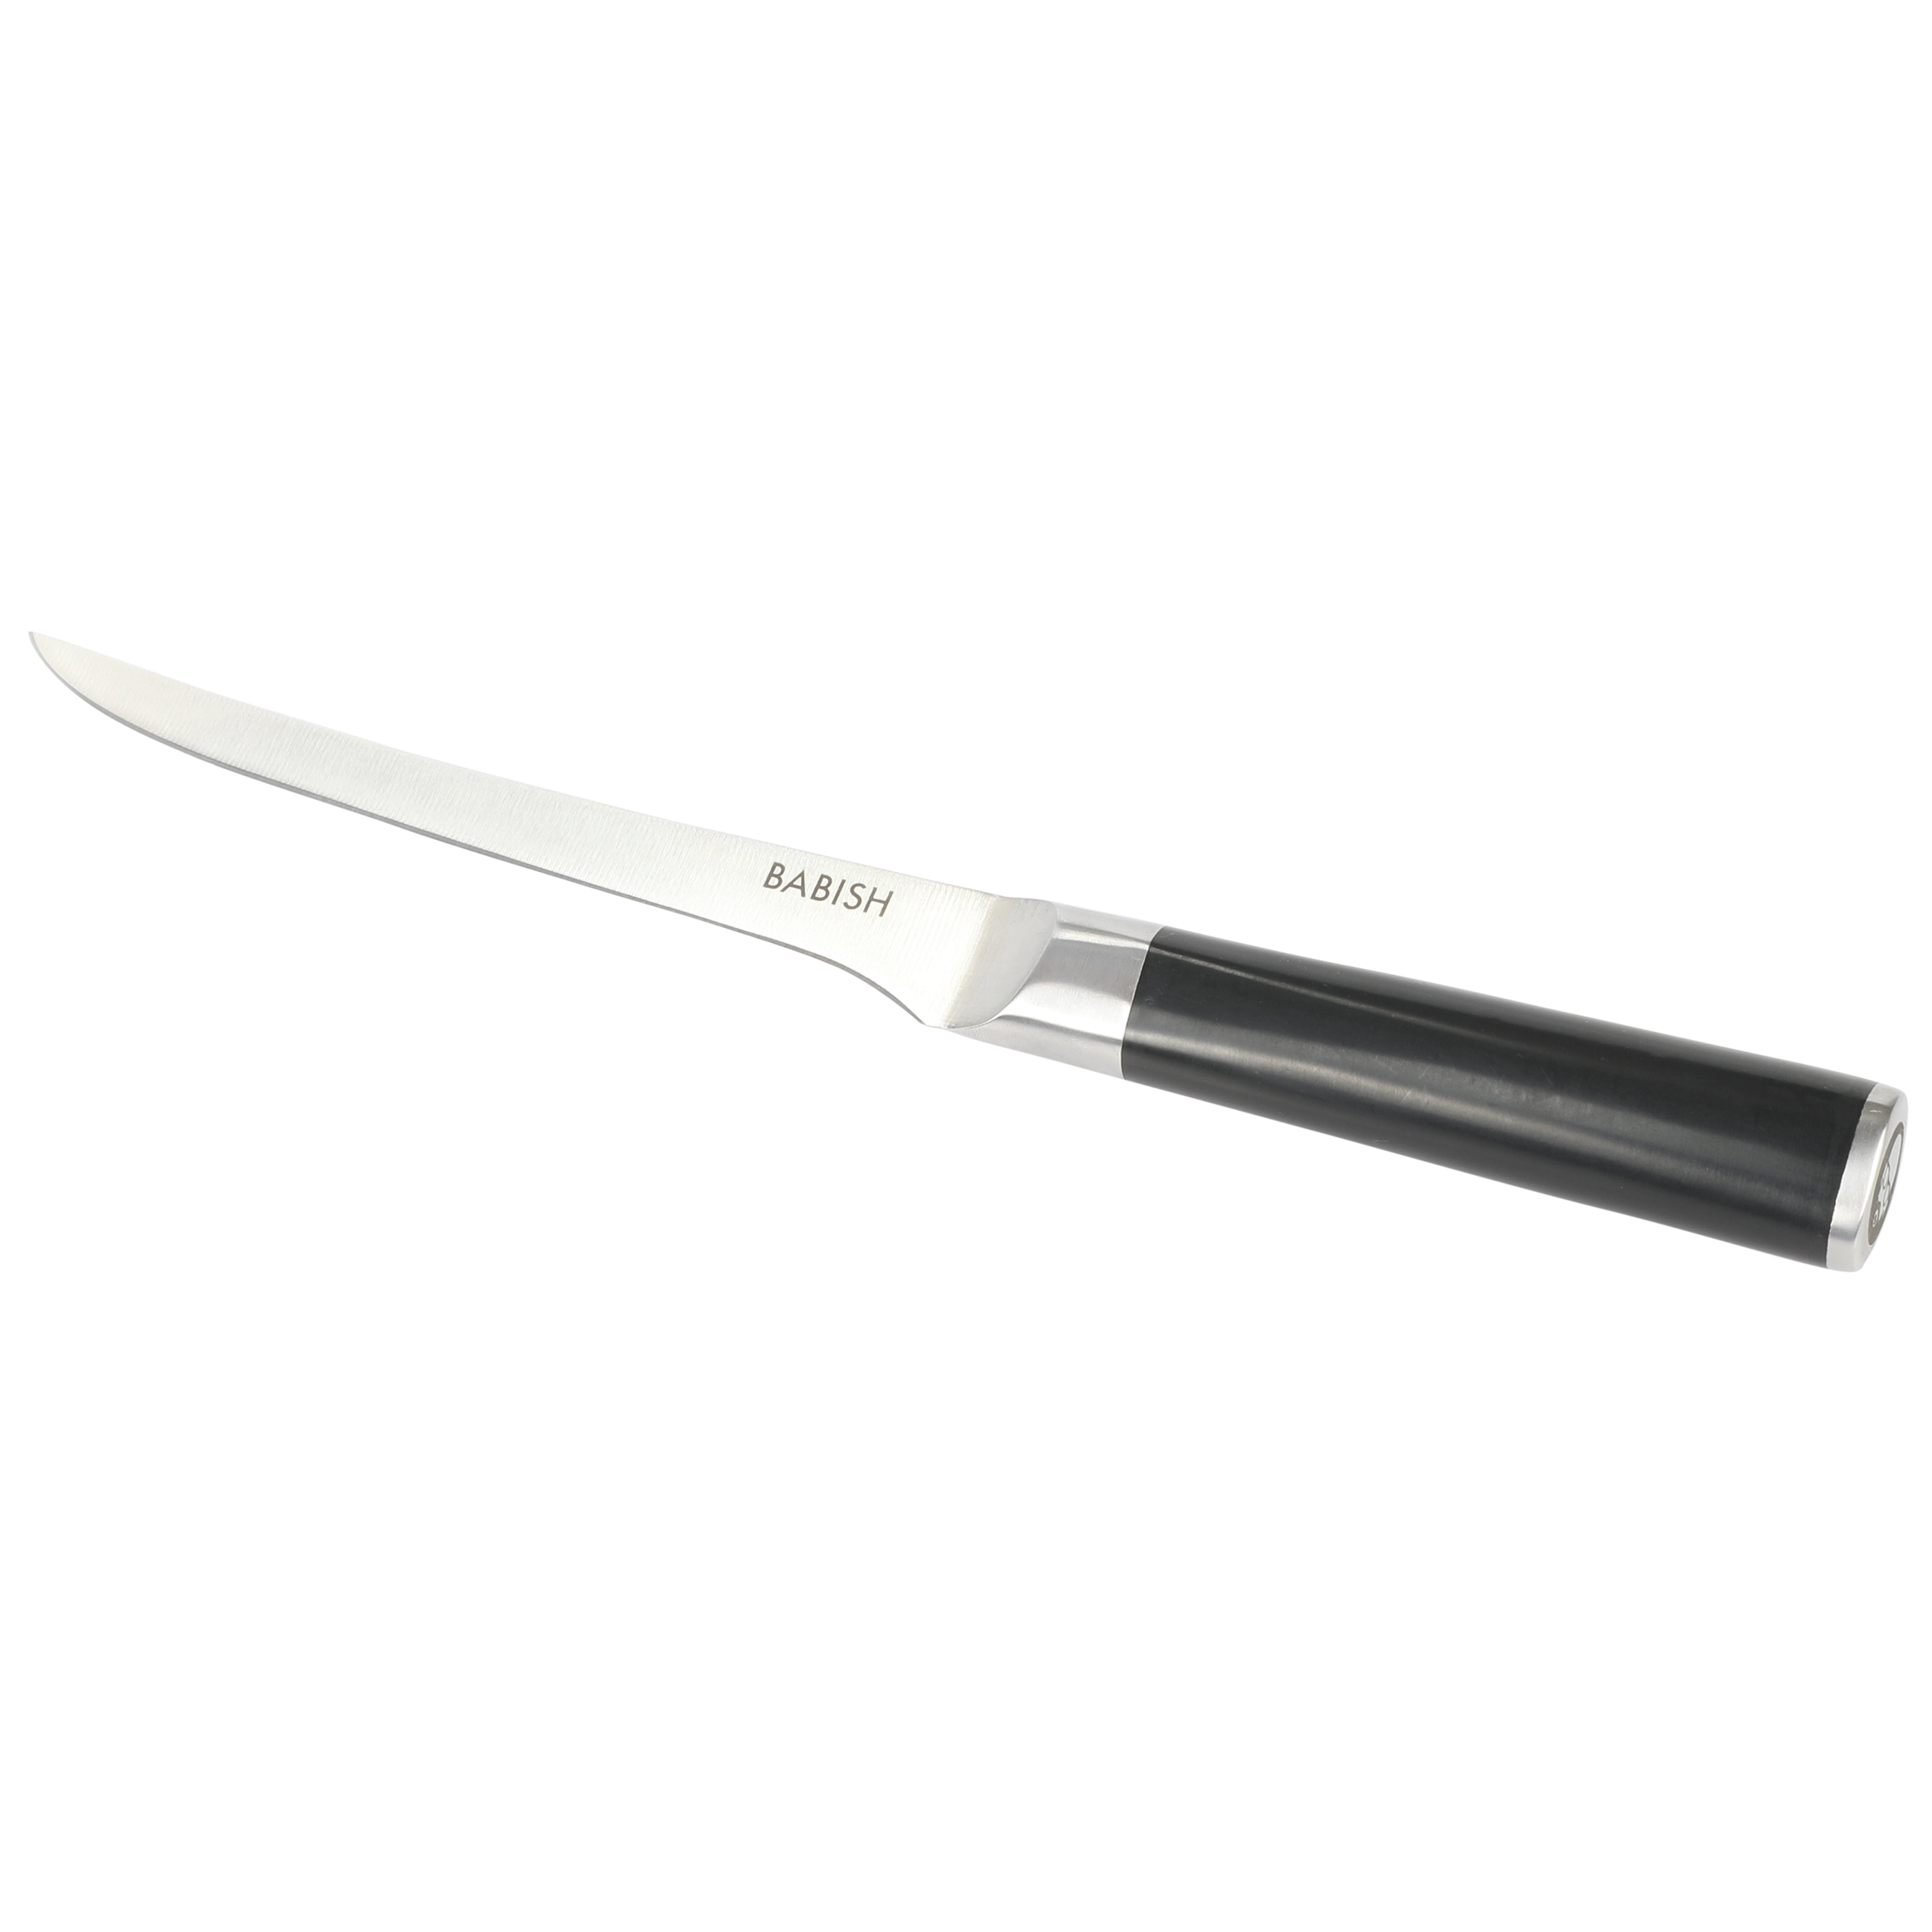 Babish 4-Pack High Carbon German Steel 5'' Steak Knife Set